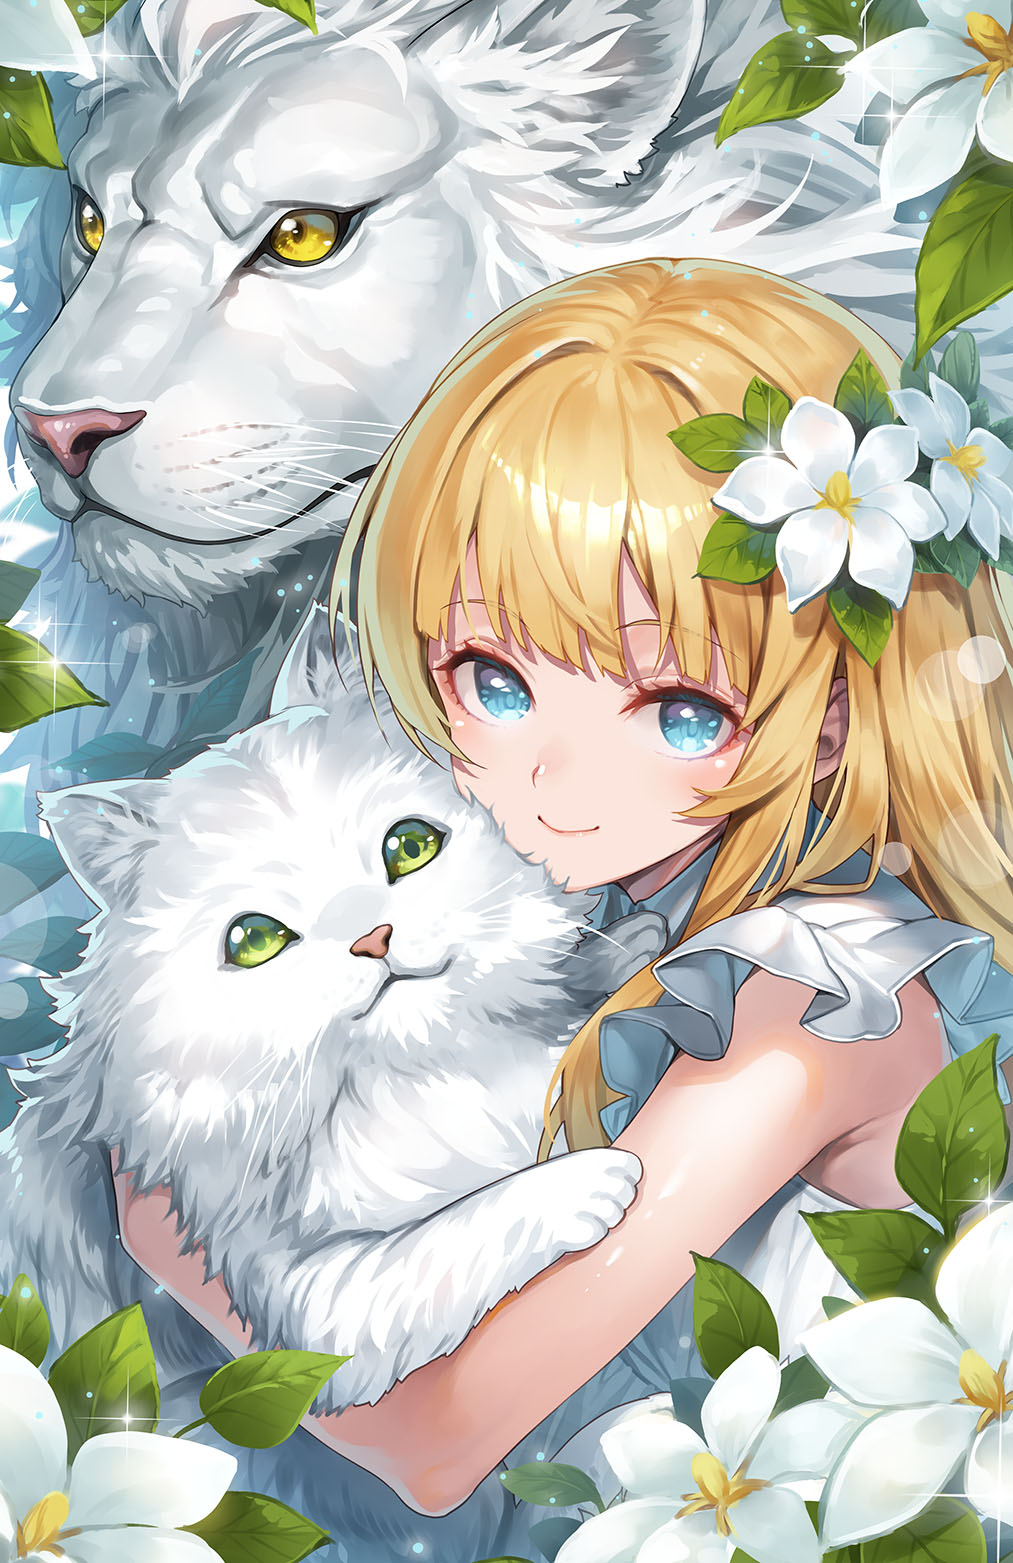 Anime Girls Portrait Display Blonde Looking At Viewer Blue Eyes White Flowers Flower In Hair Smiling 1013x1563